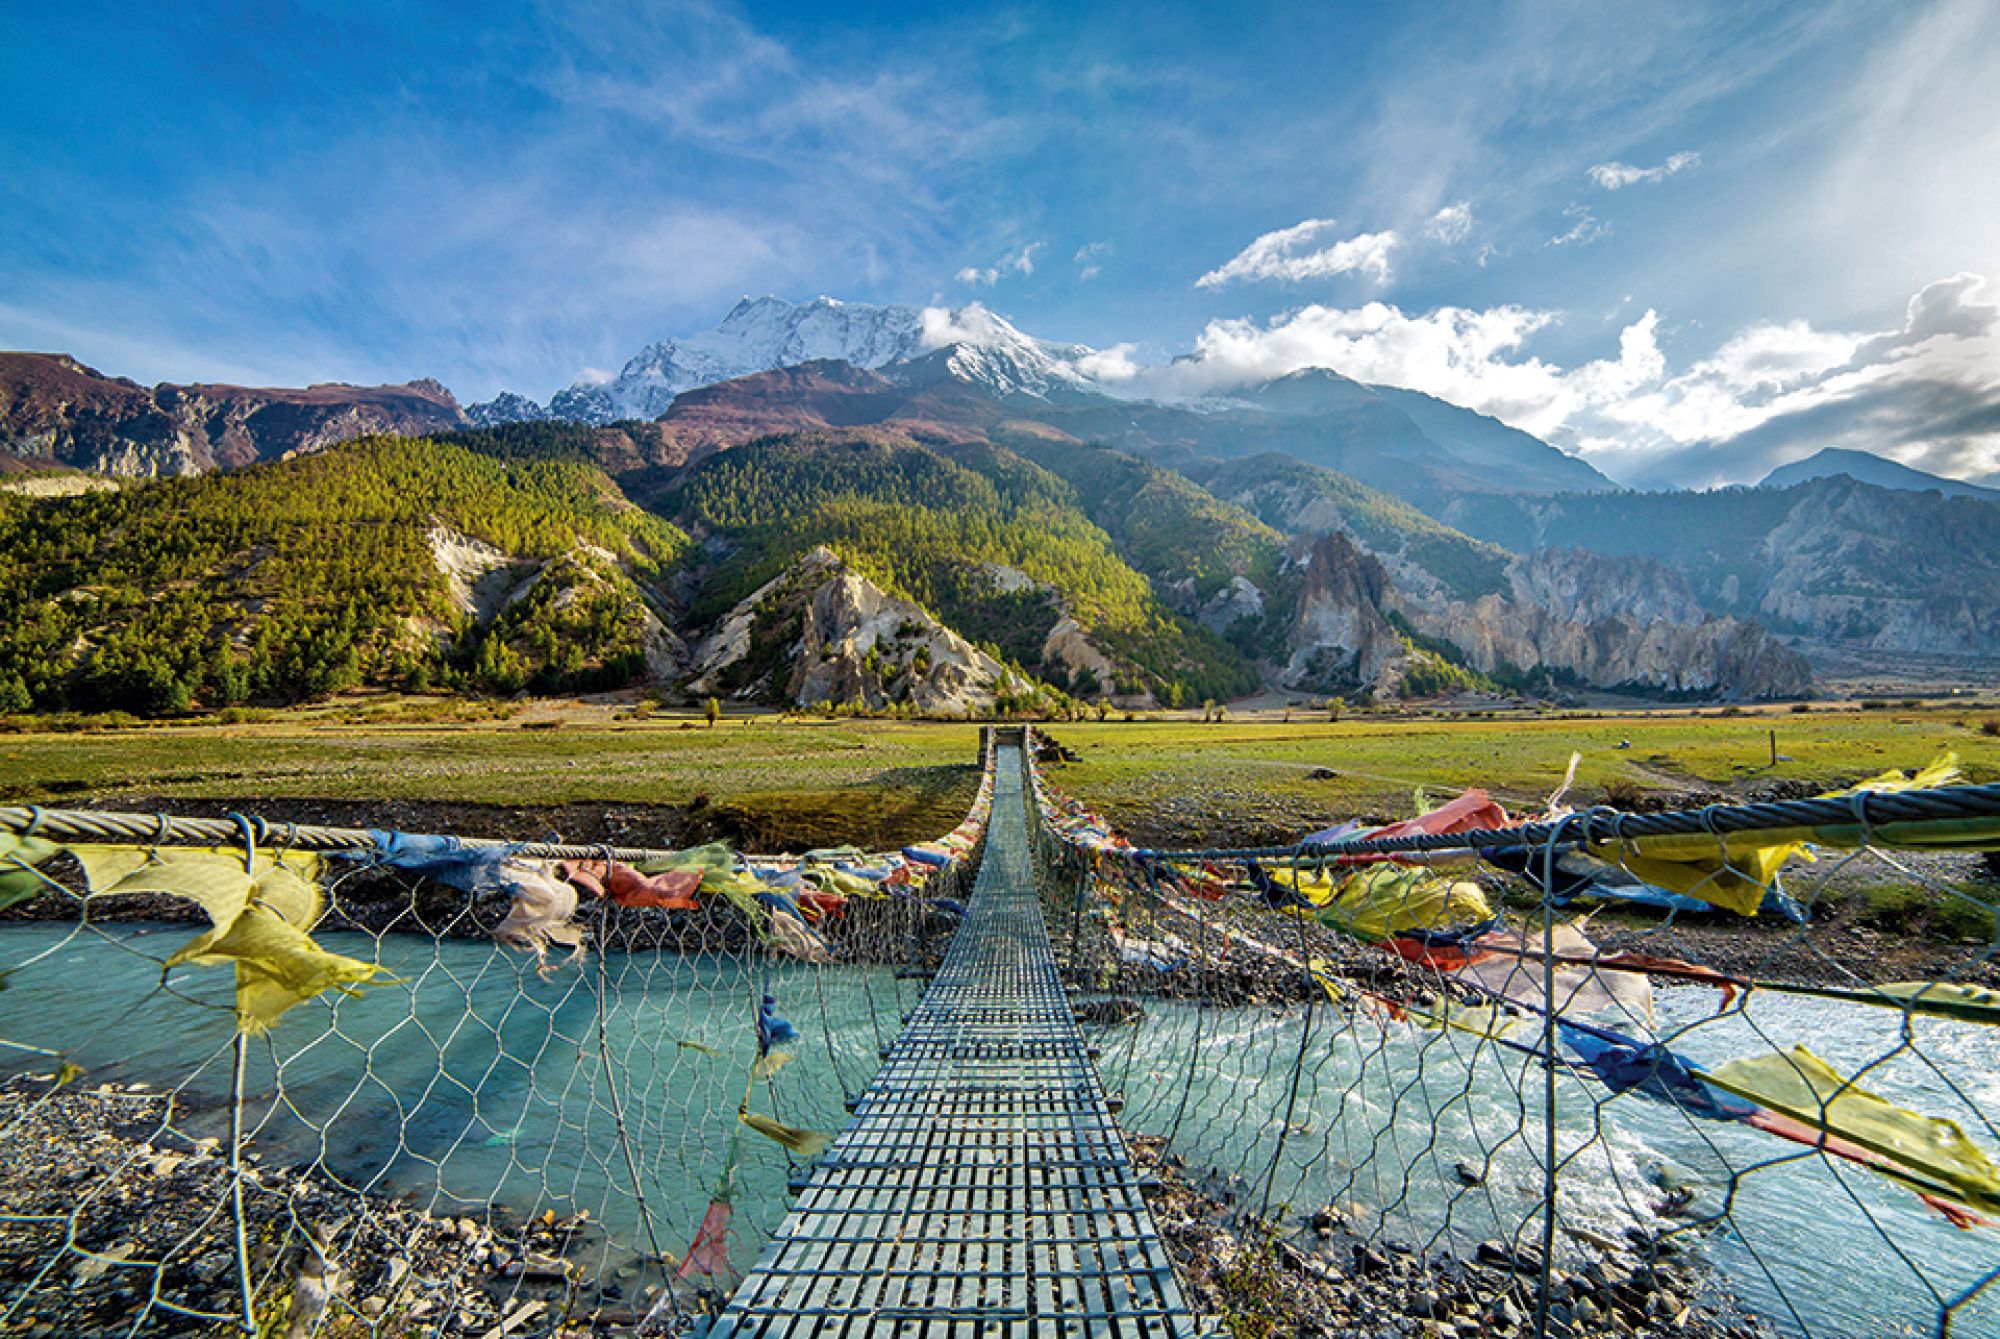 Suspension bridge with buddhist prayer flags Annapurna